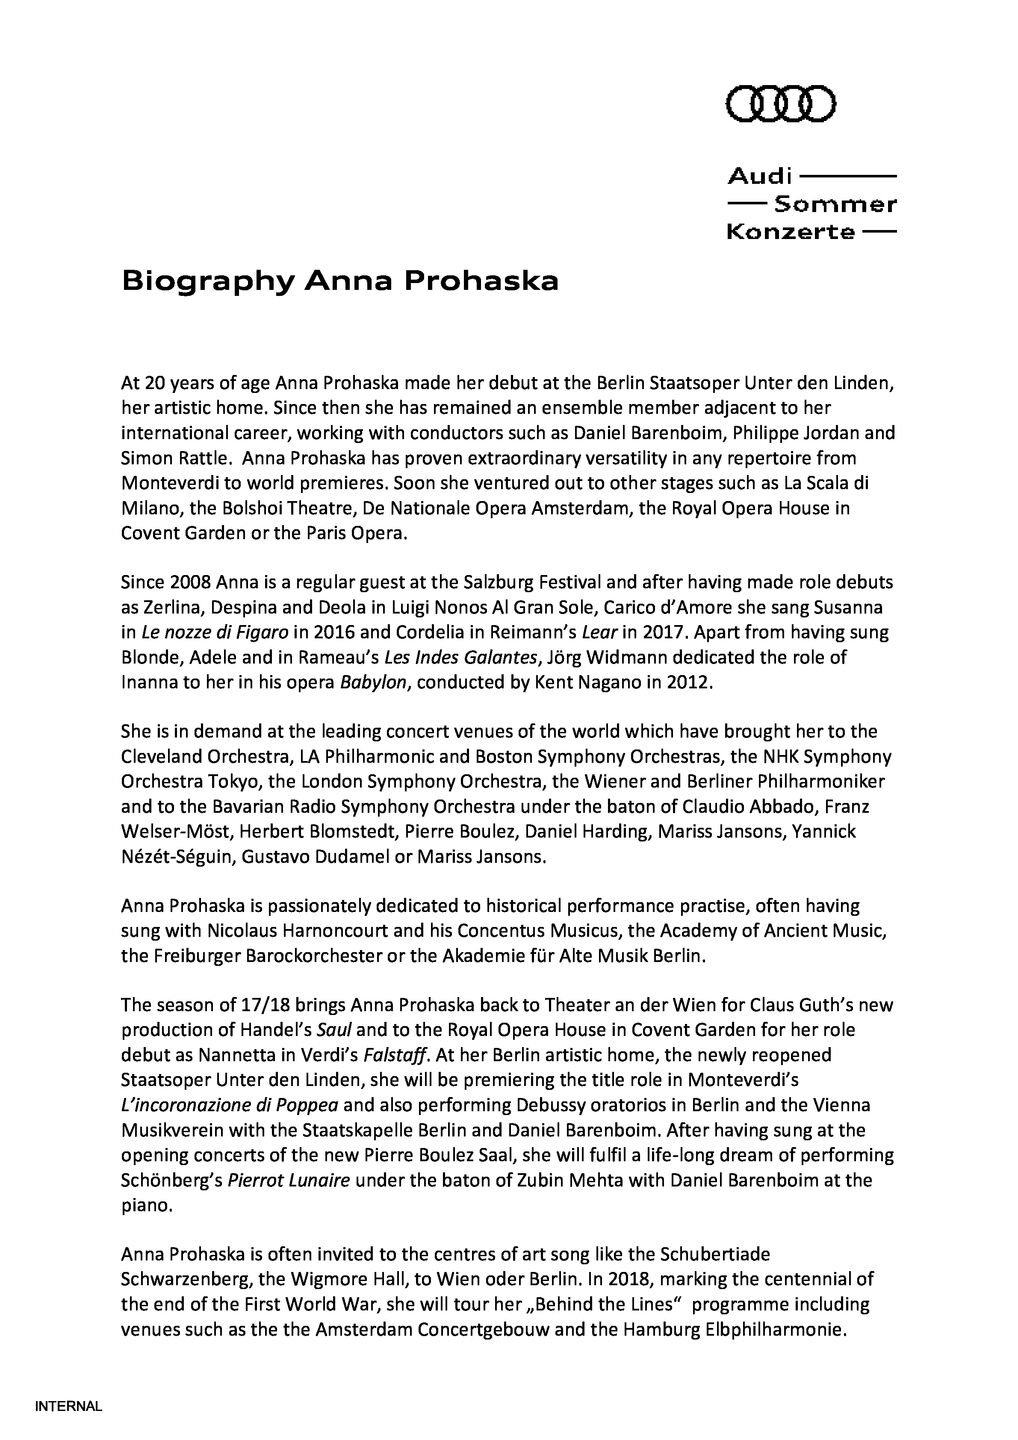 Biography Anna Prohaska